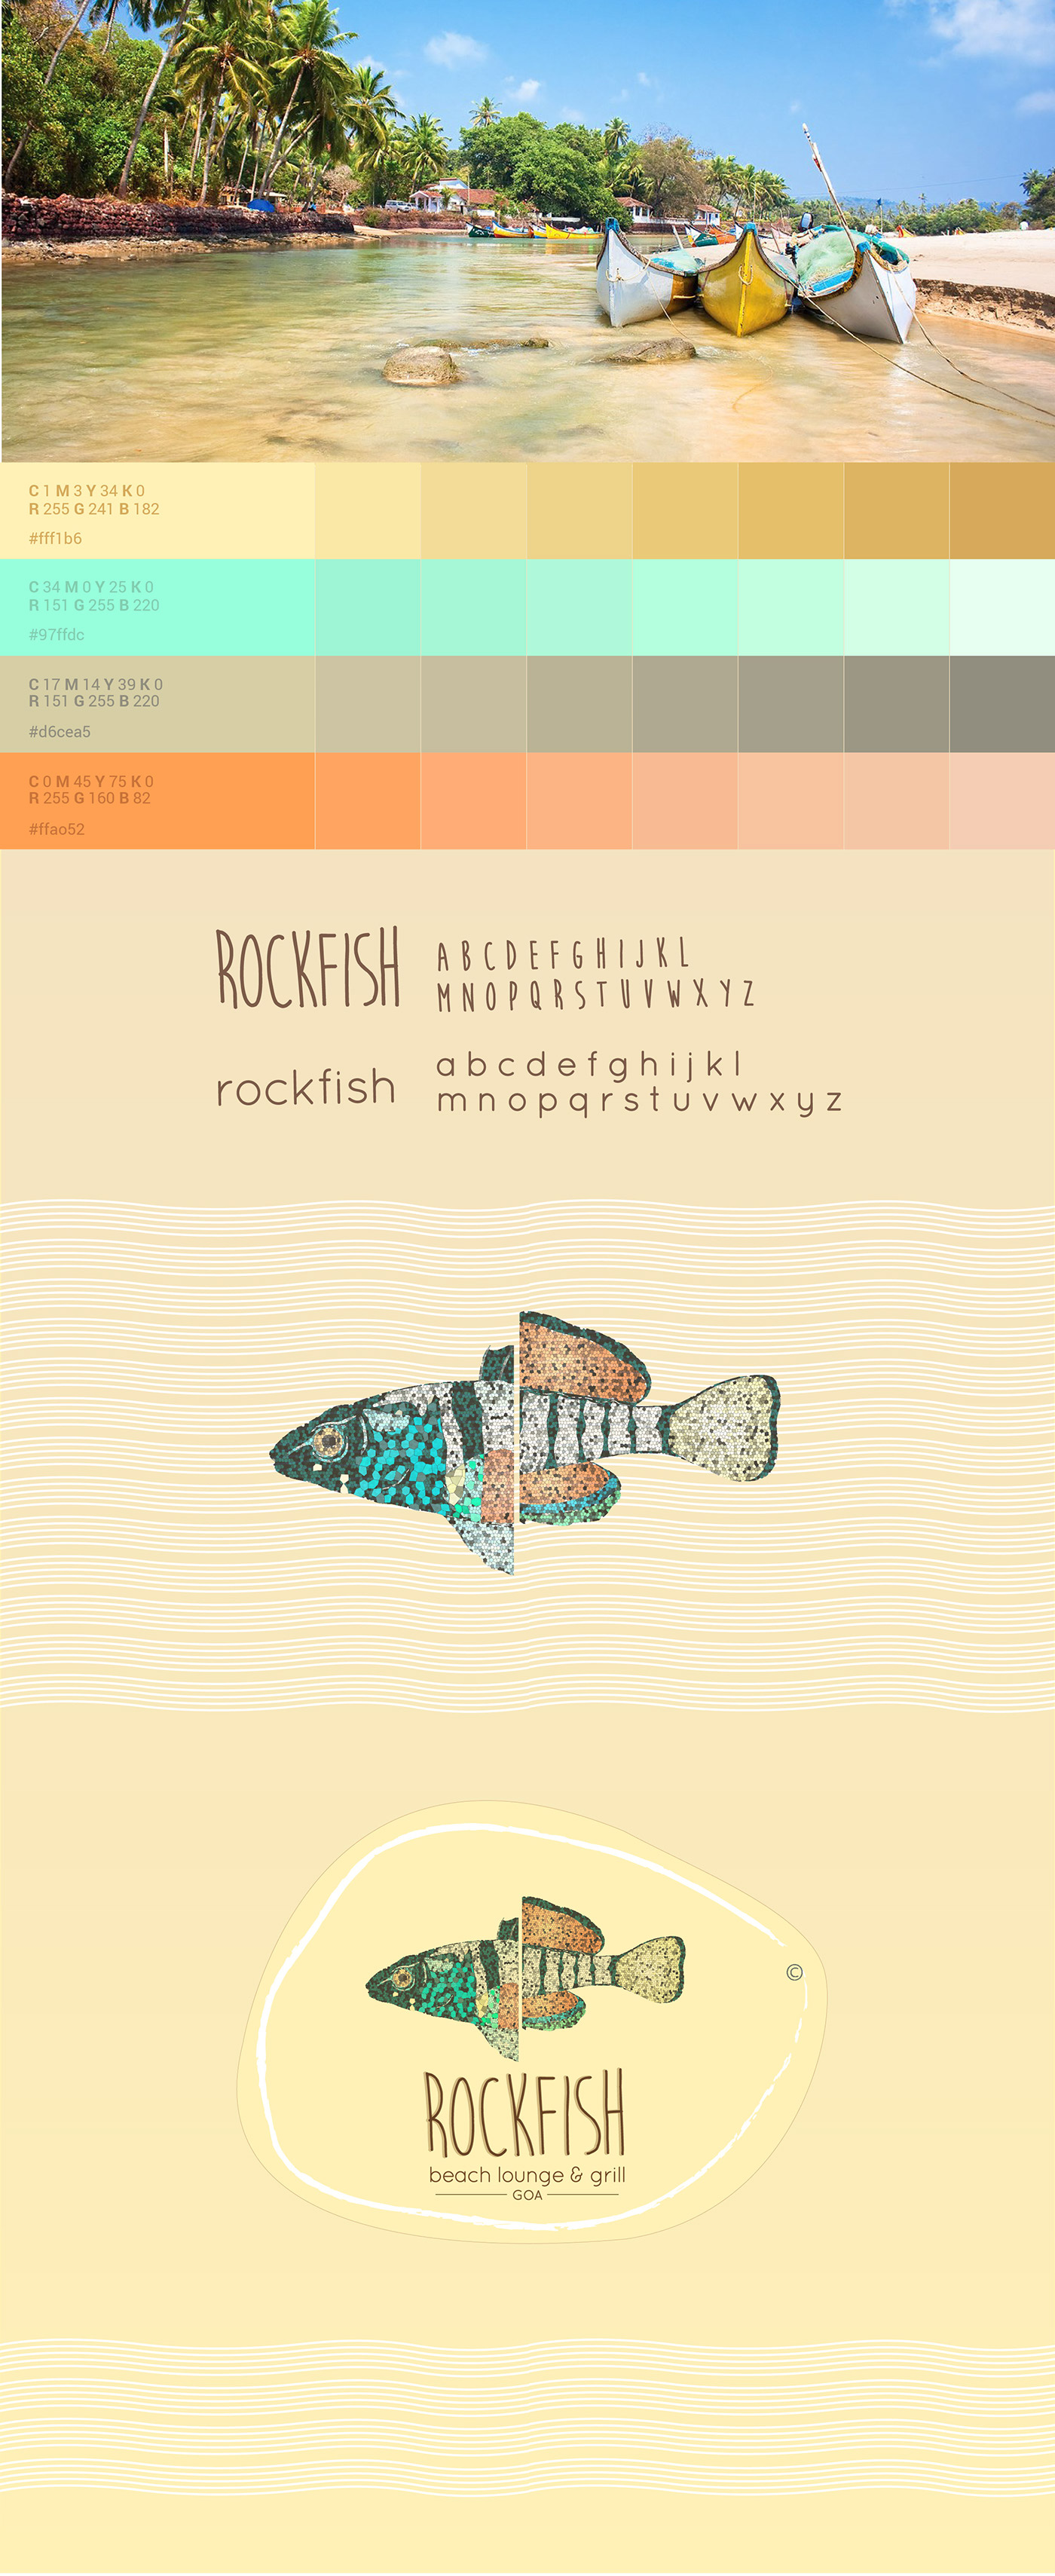 Goa India mediterranean beach lounge restaurant fish mosaic sea logo identity Food  seafood